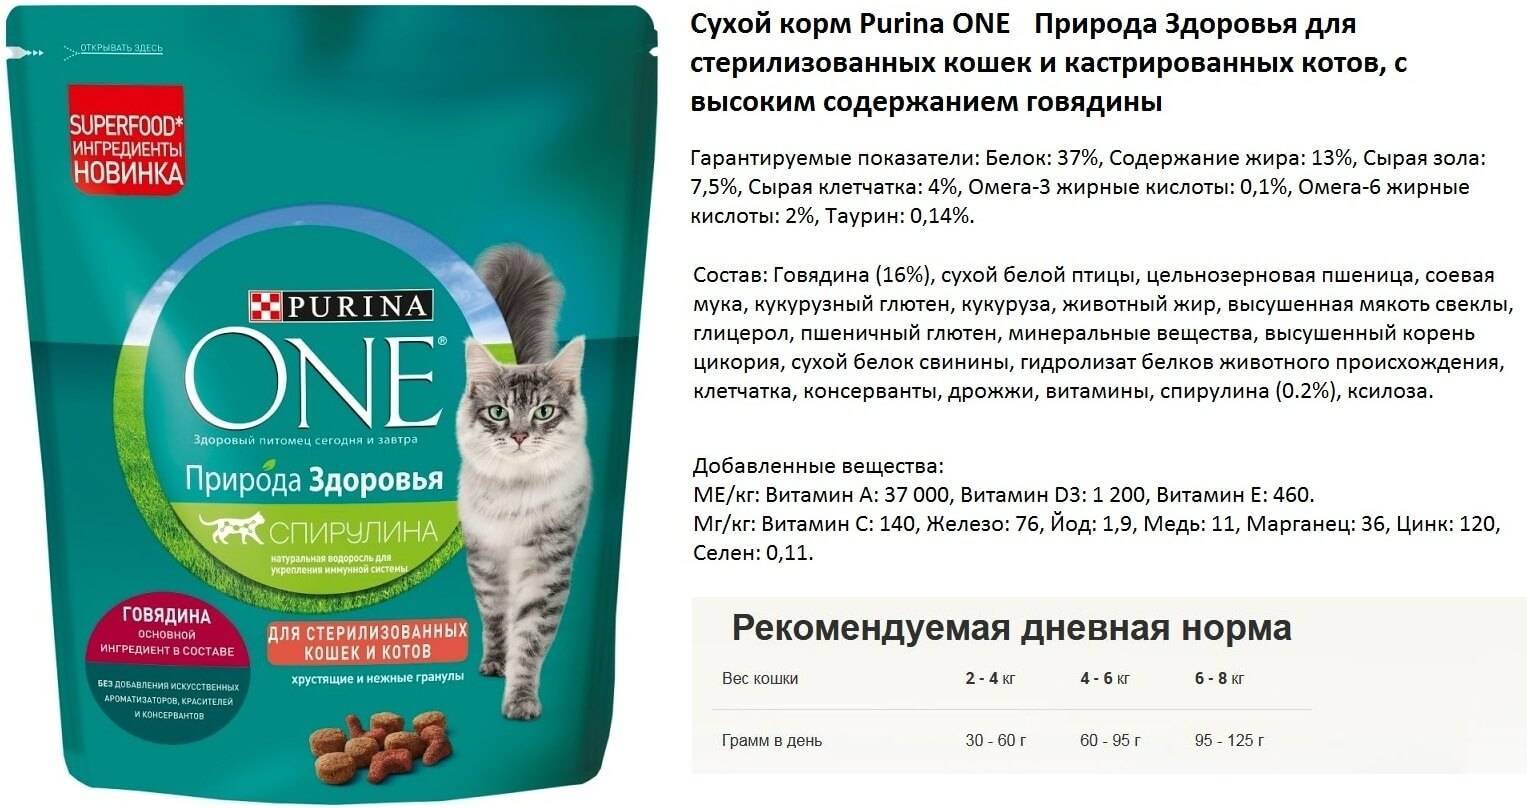 Пурина - корм для кошек, разновидности, состав, рекомендации